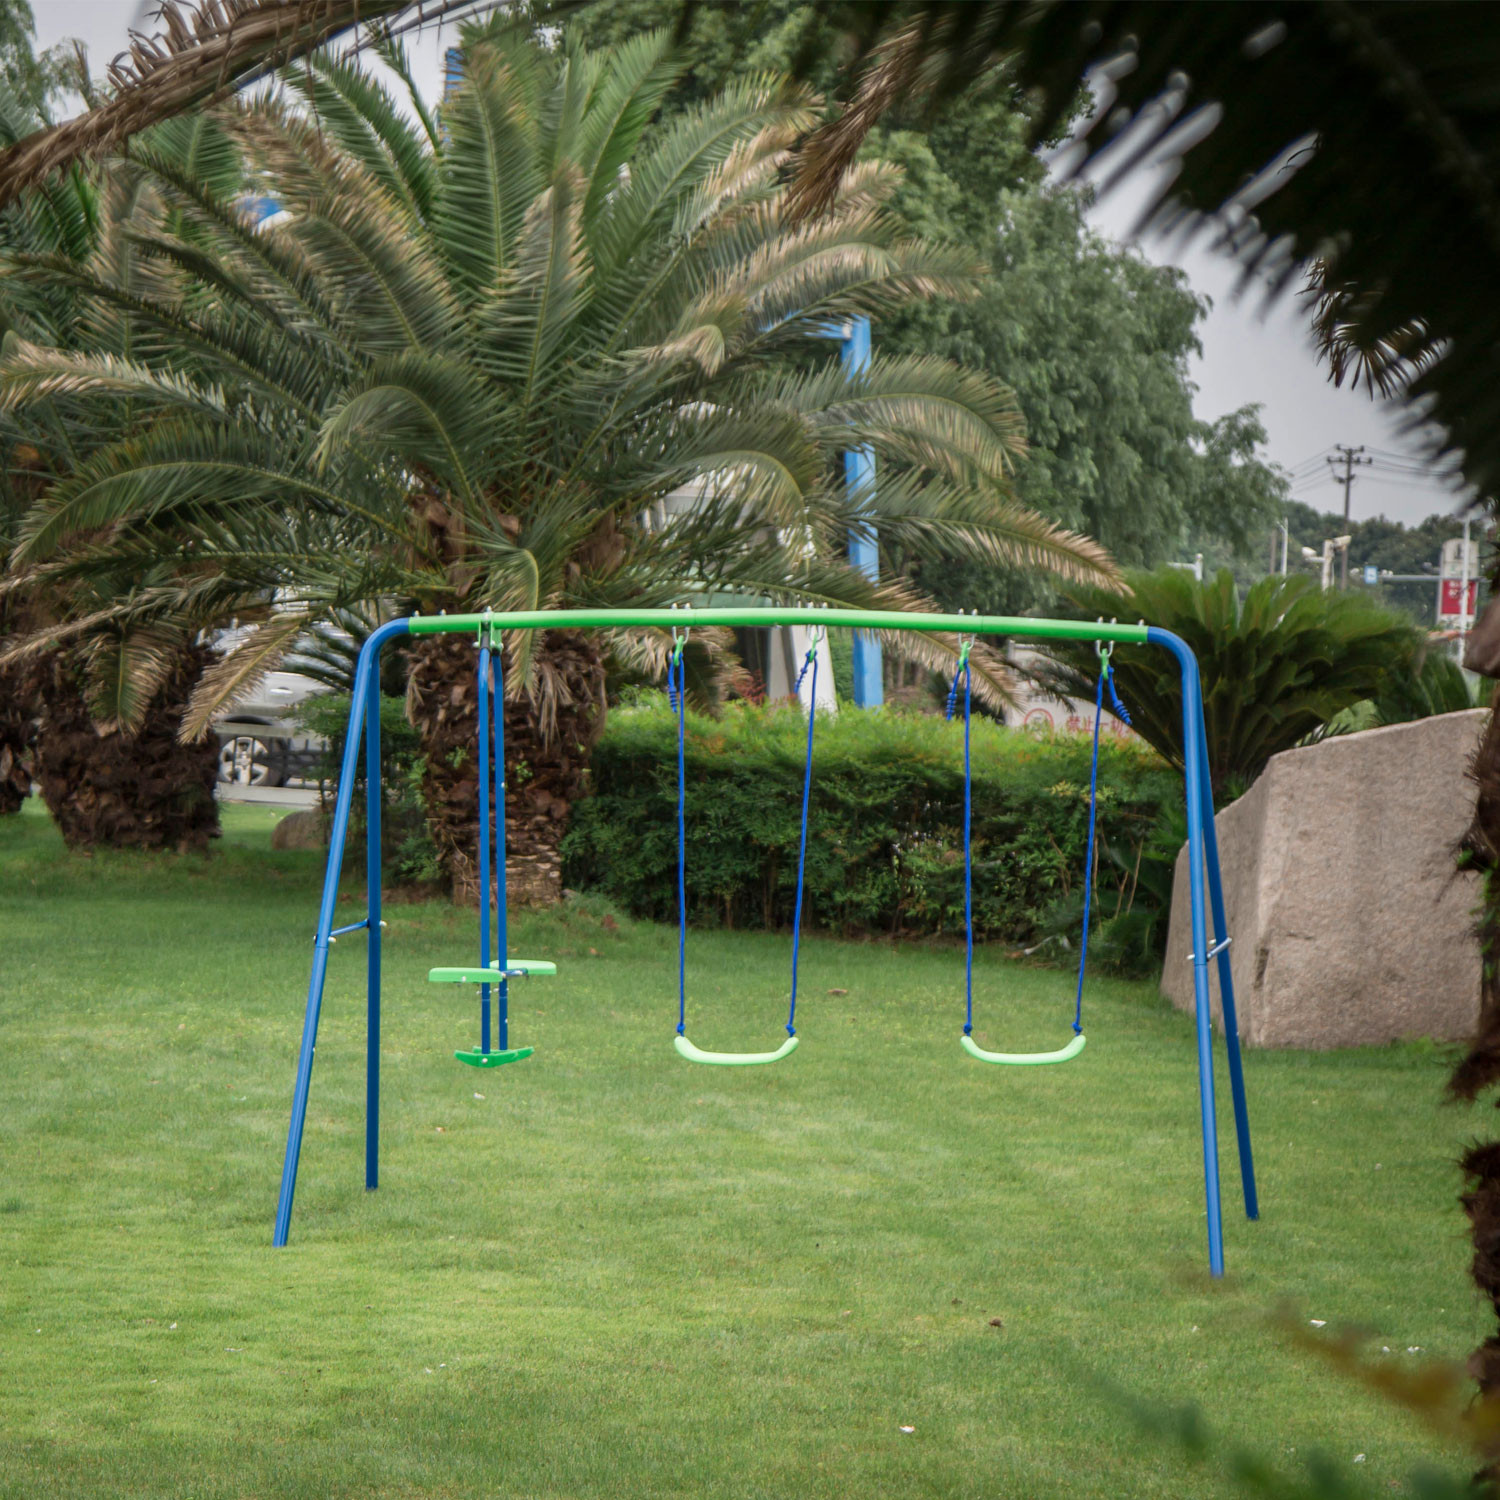 Walmart Backyard Playsets
 Kinbor 3 in 1 Outdoor Fun Swing Set with Two Swings